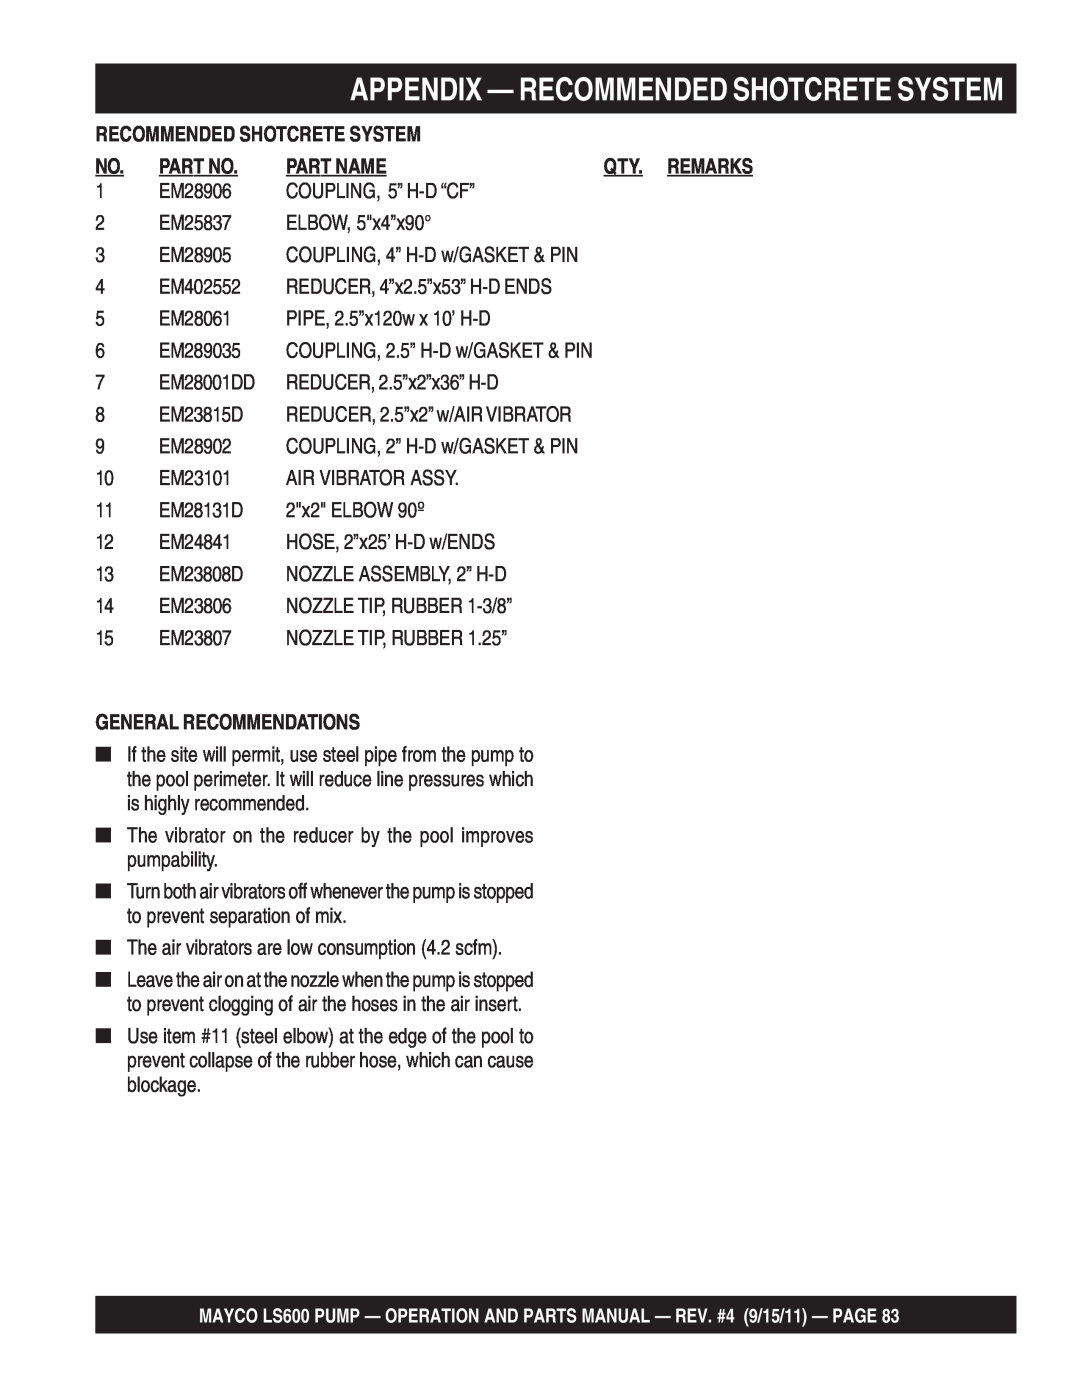 Multiquip LS600 manual Appendix - Recommended Shotcrete System, No. Part No, Part Name, General Recommendations 